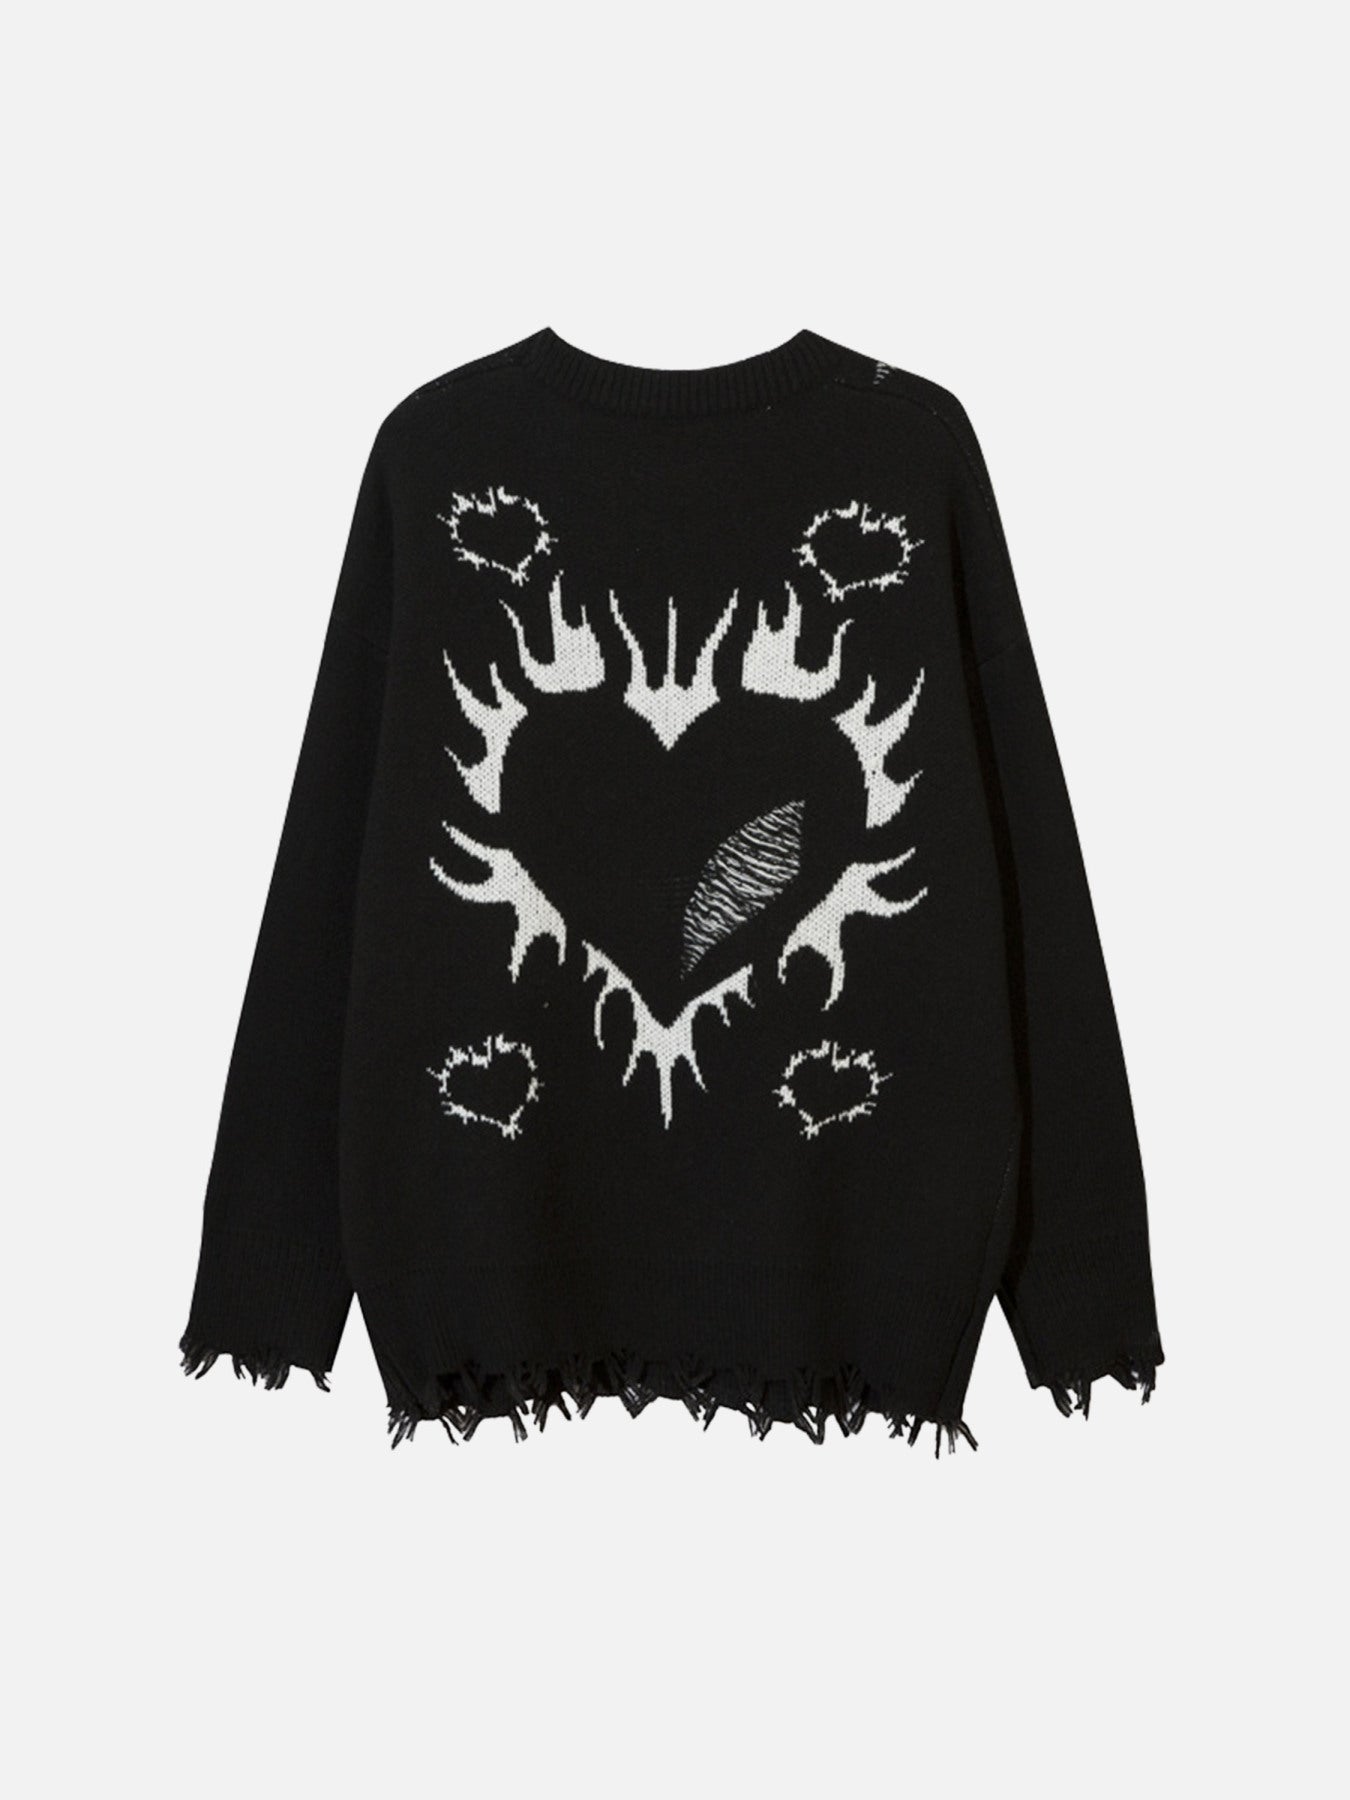 Thesupermade Creative Flame Heart Sweater